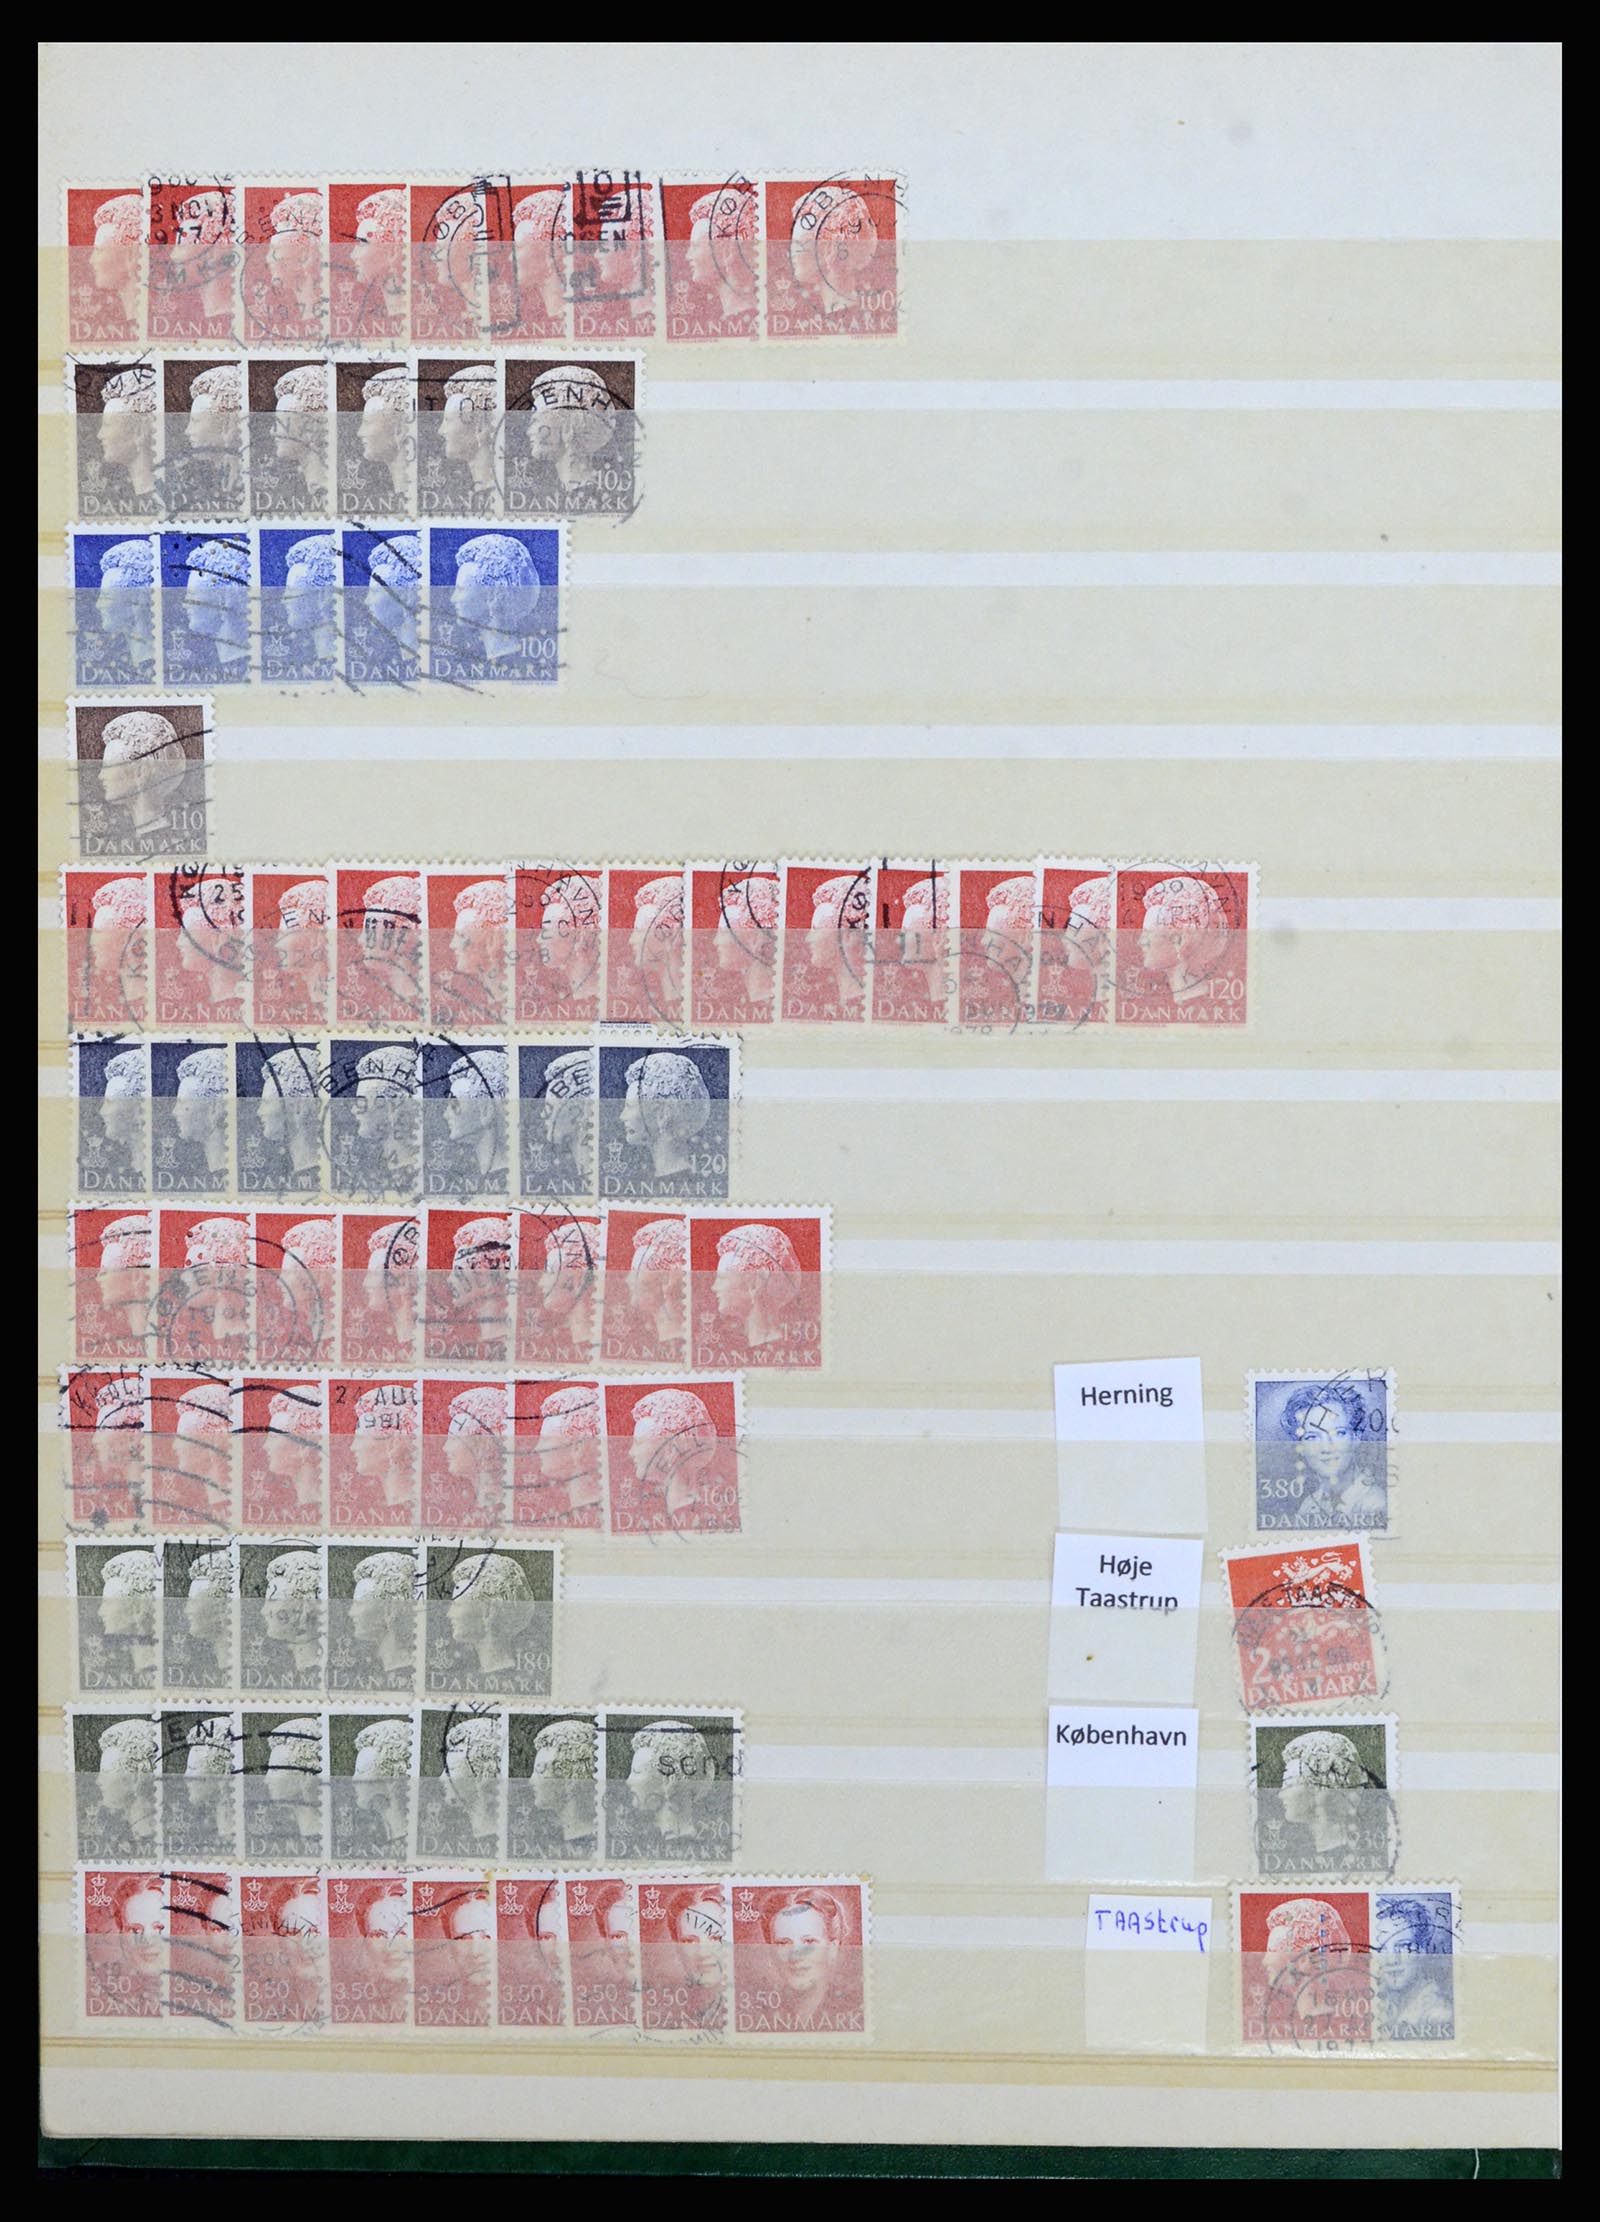 37056 037 - Stamp collection 37056 Denmark perfins.